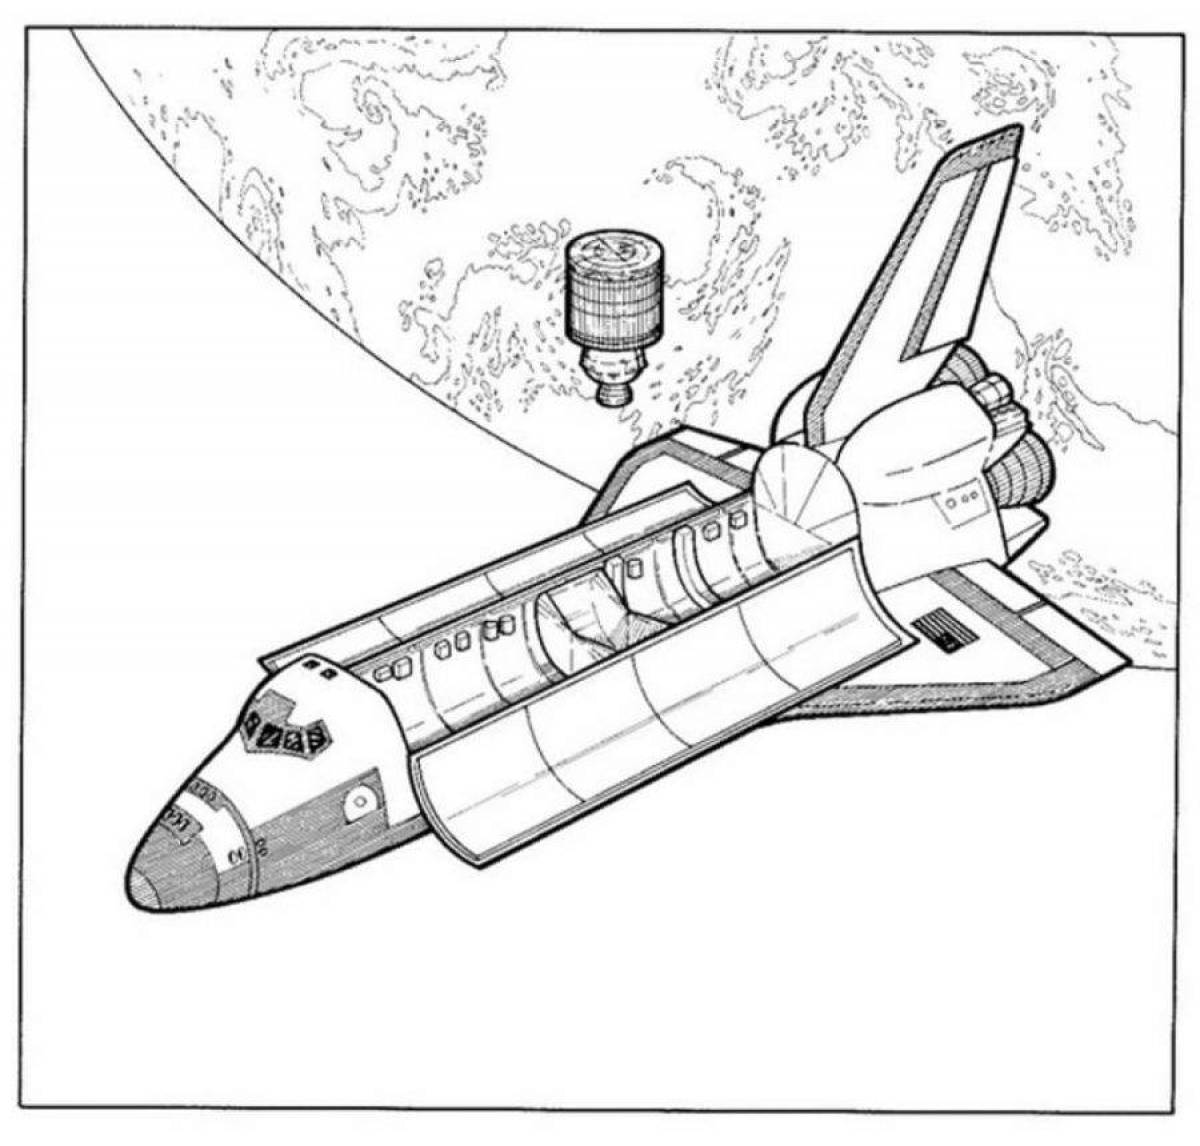 Adorable spaceship coloring page